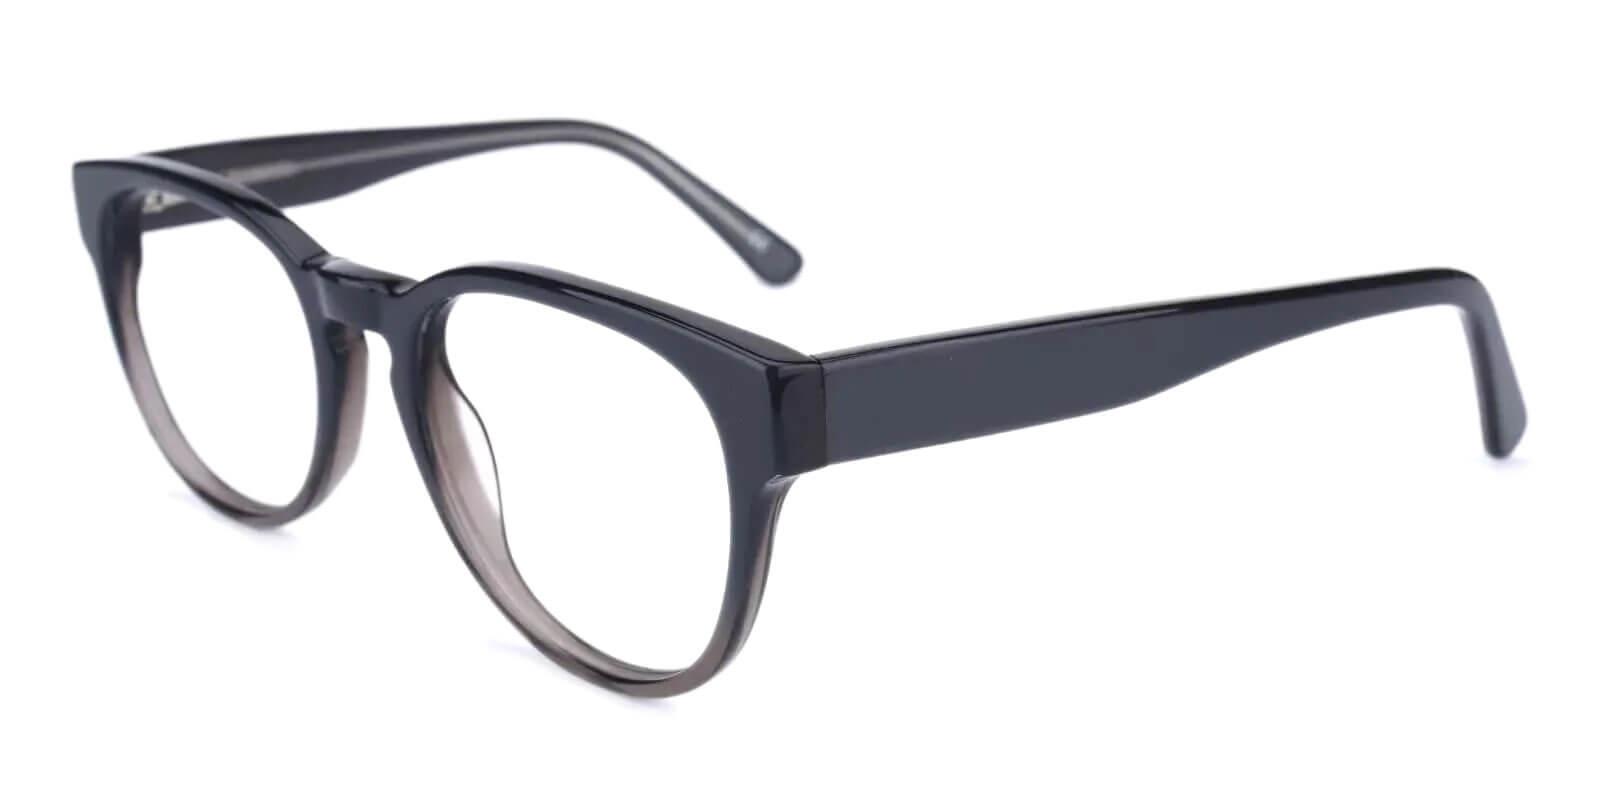 Aurora Gray Acetate Eyeglasses , Fashion , SpringHinges , UniversalBridgeFit Frames from ABBE Glasses